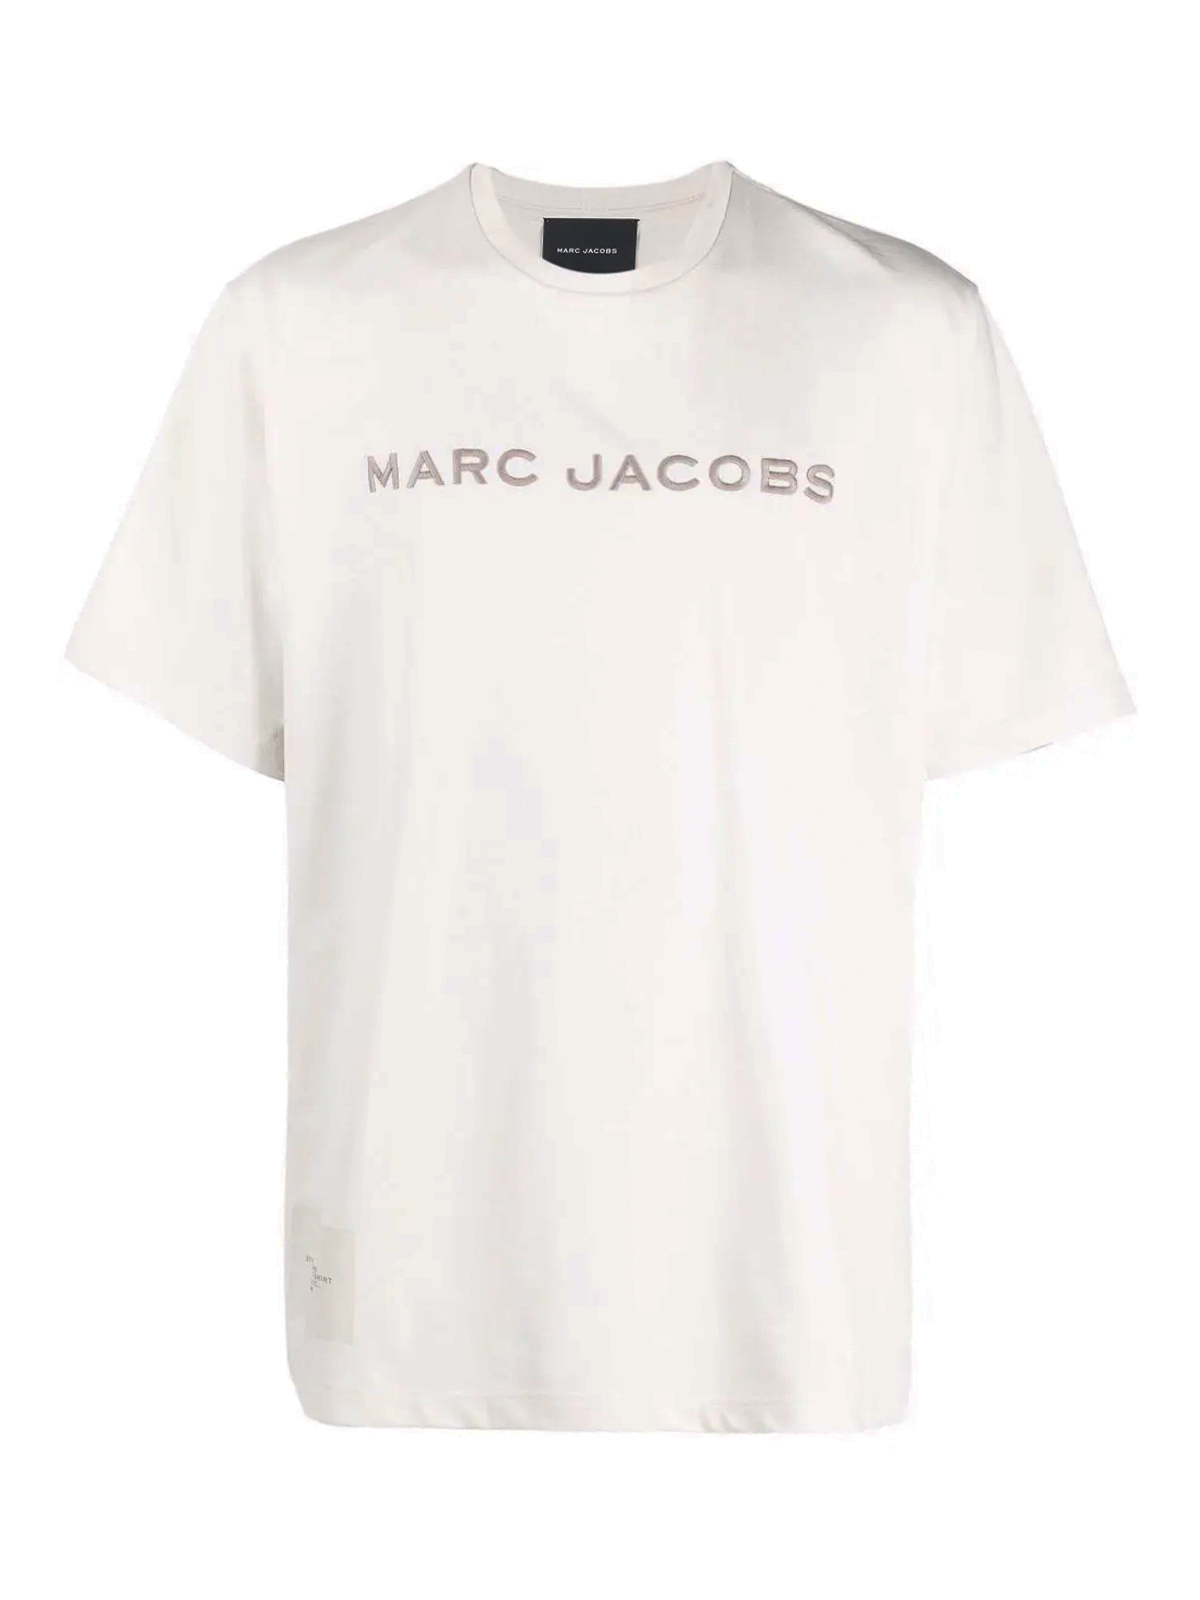 Tシャツ Marc Jacobs - Tシャツ - 白 - C602C06PF21177 | iKRIX.com